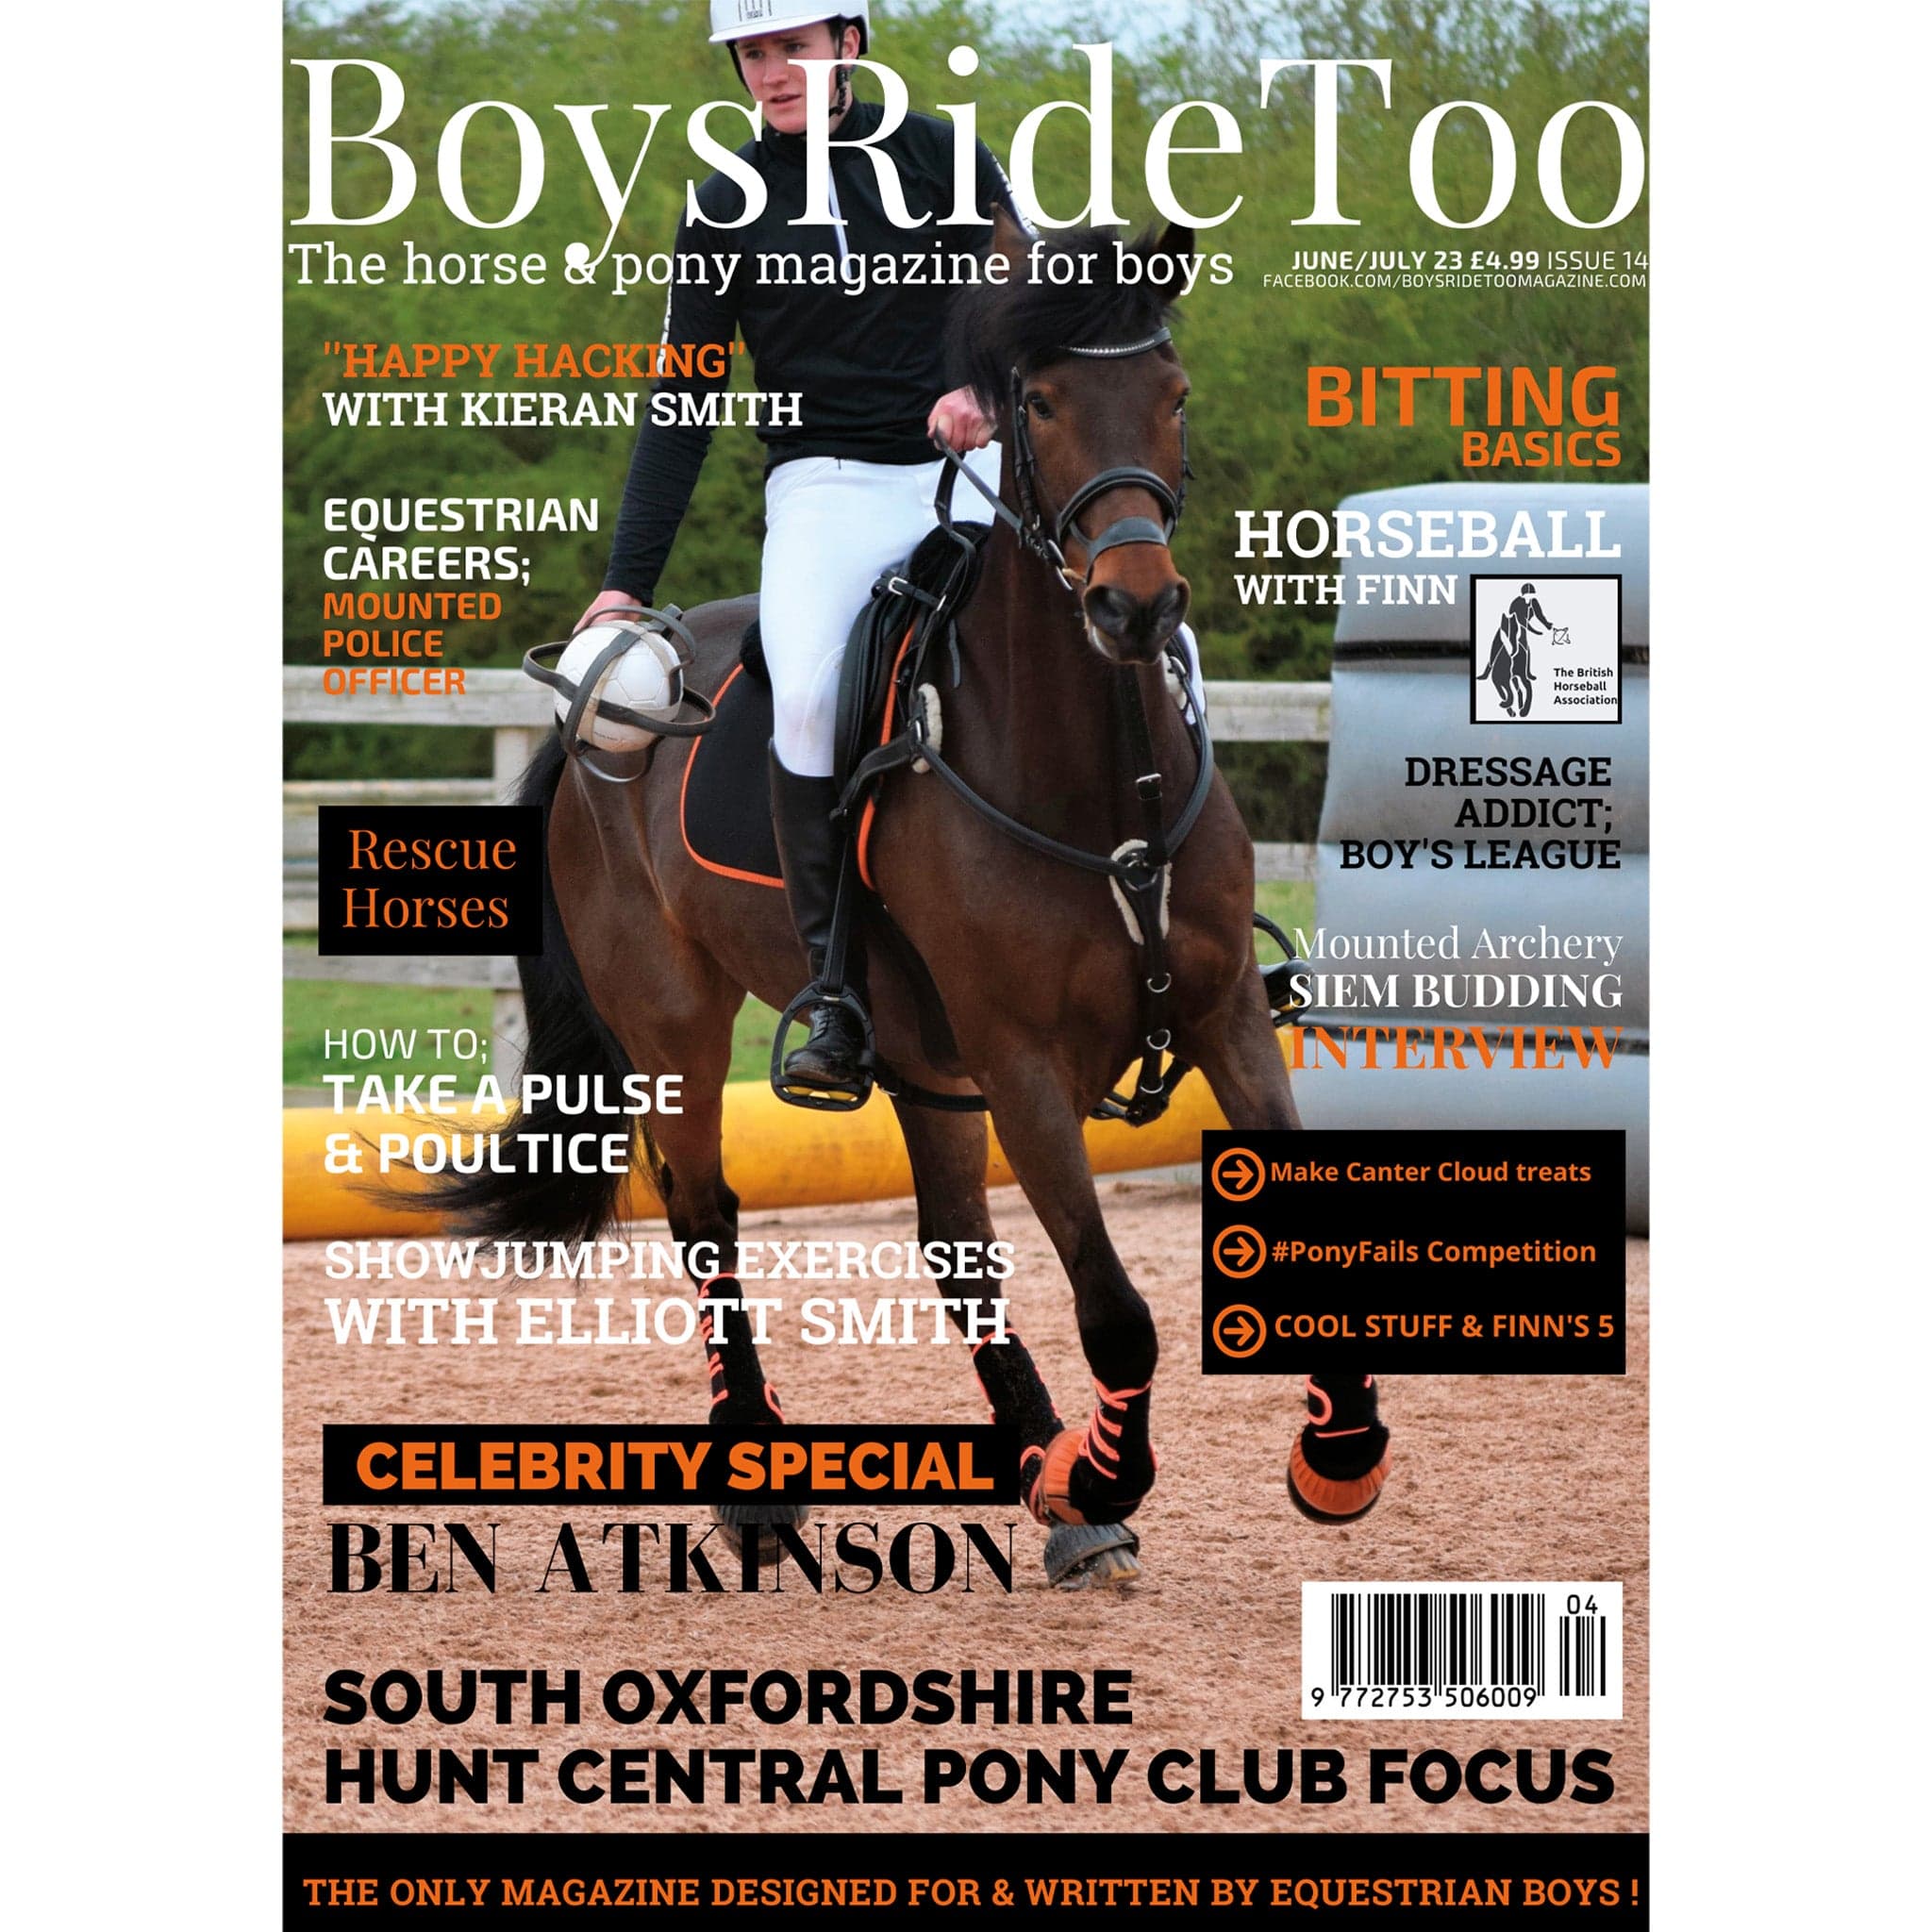 Boys Ride Too Magazine Issue 14